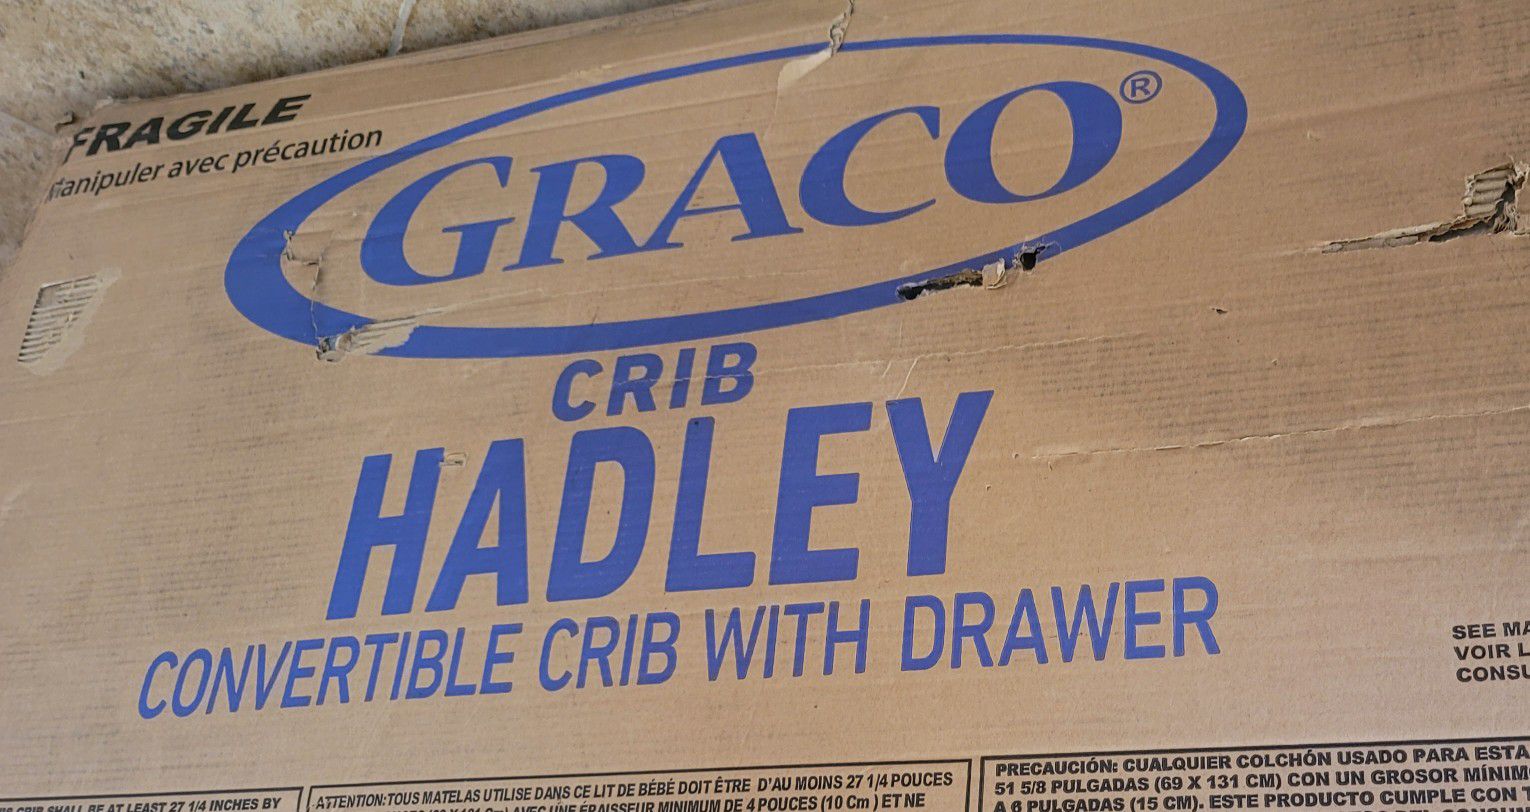 Graco Crib Hadley 